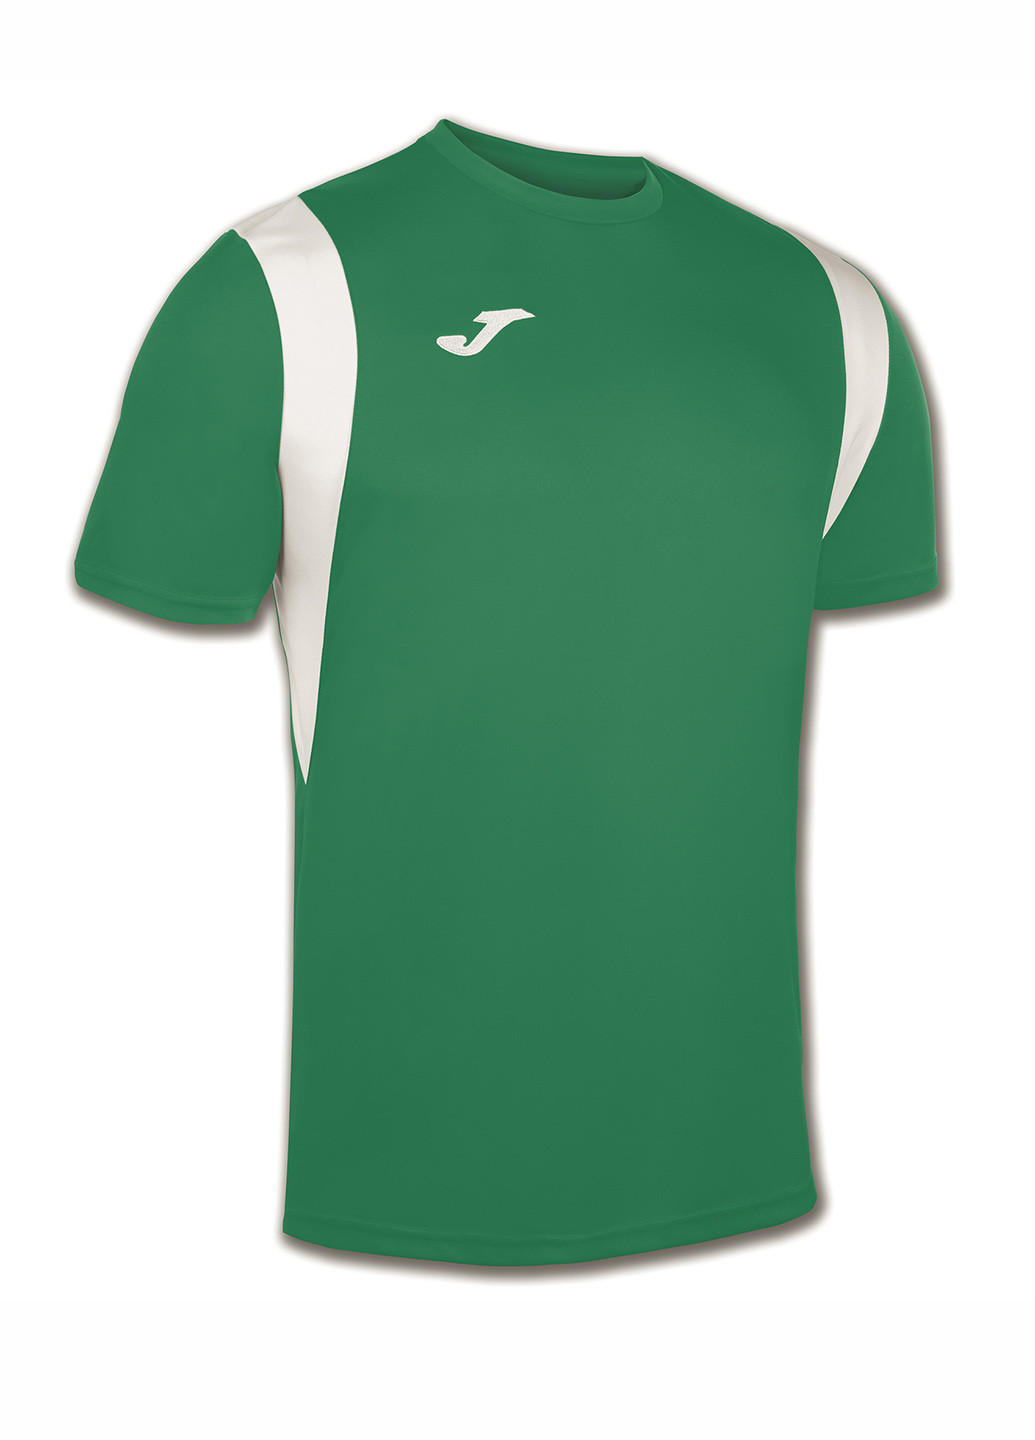 Зеленая футболка Joma 100446.450